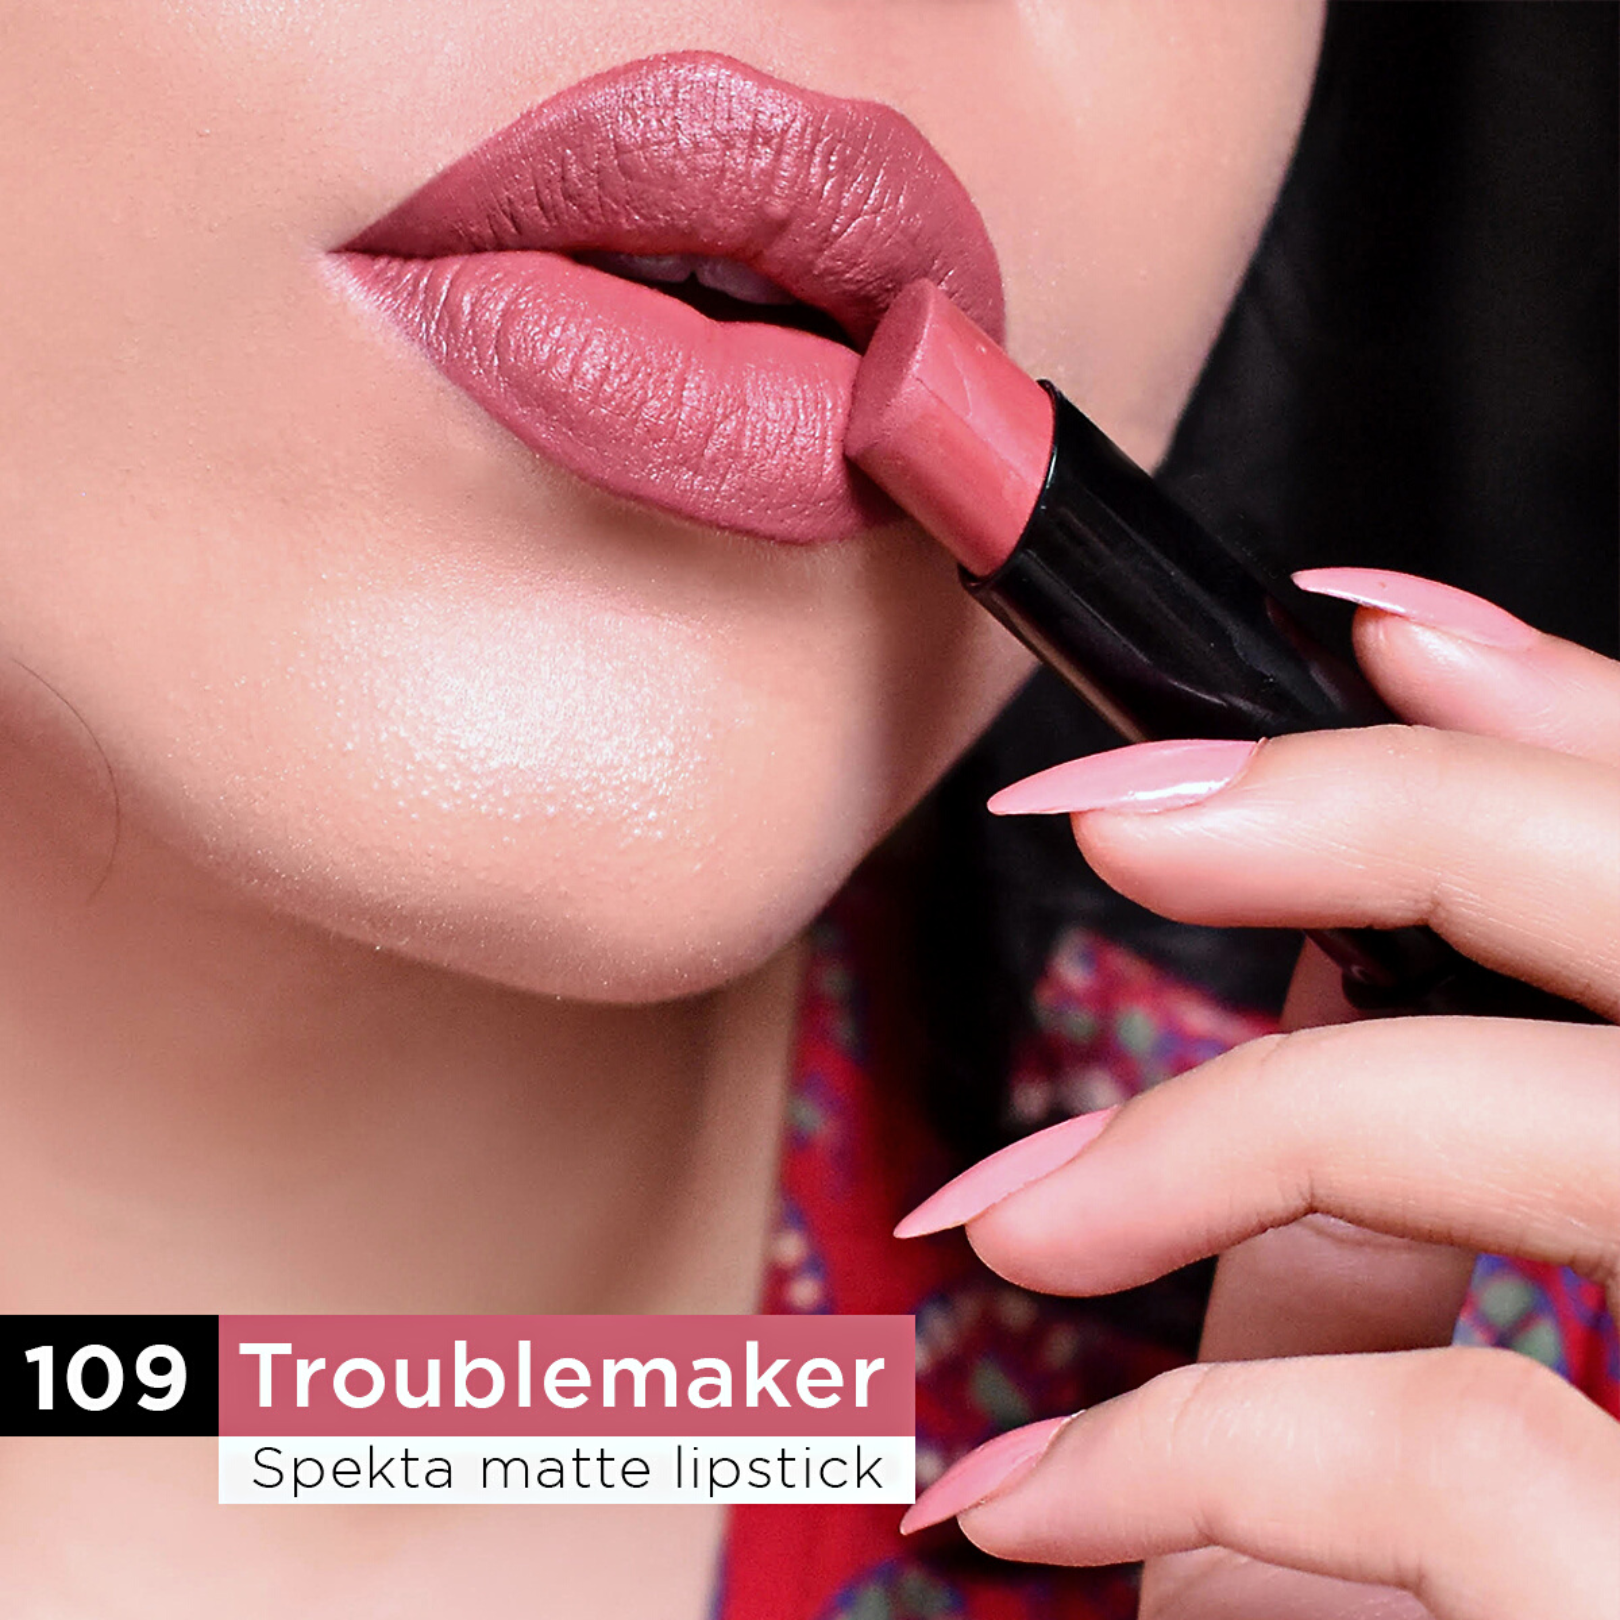 Spekta True Matte Lipstick- 109 Troublemaker (3.7g, Terracotta)